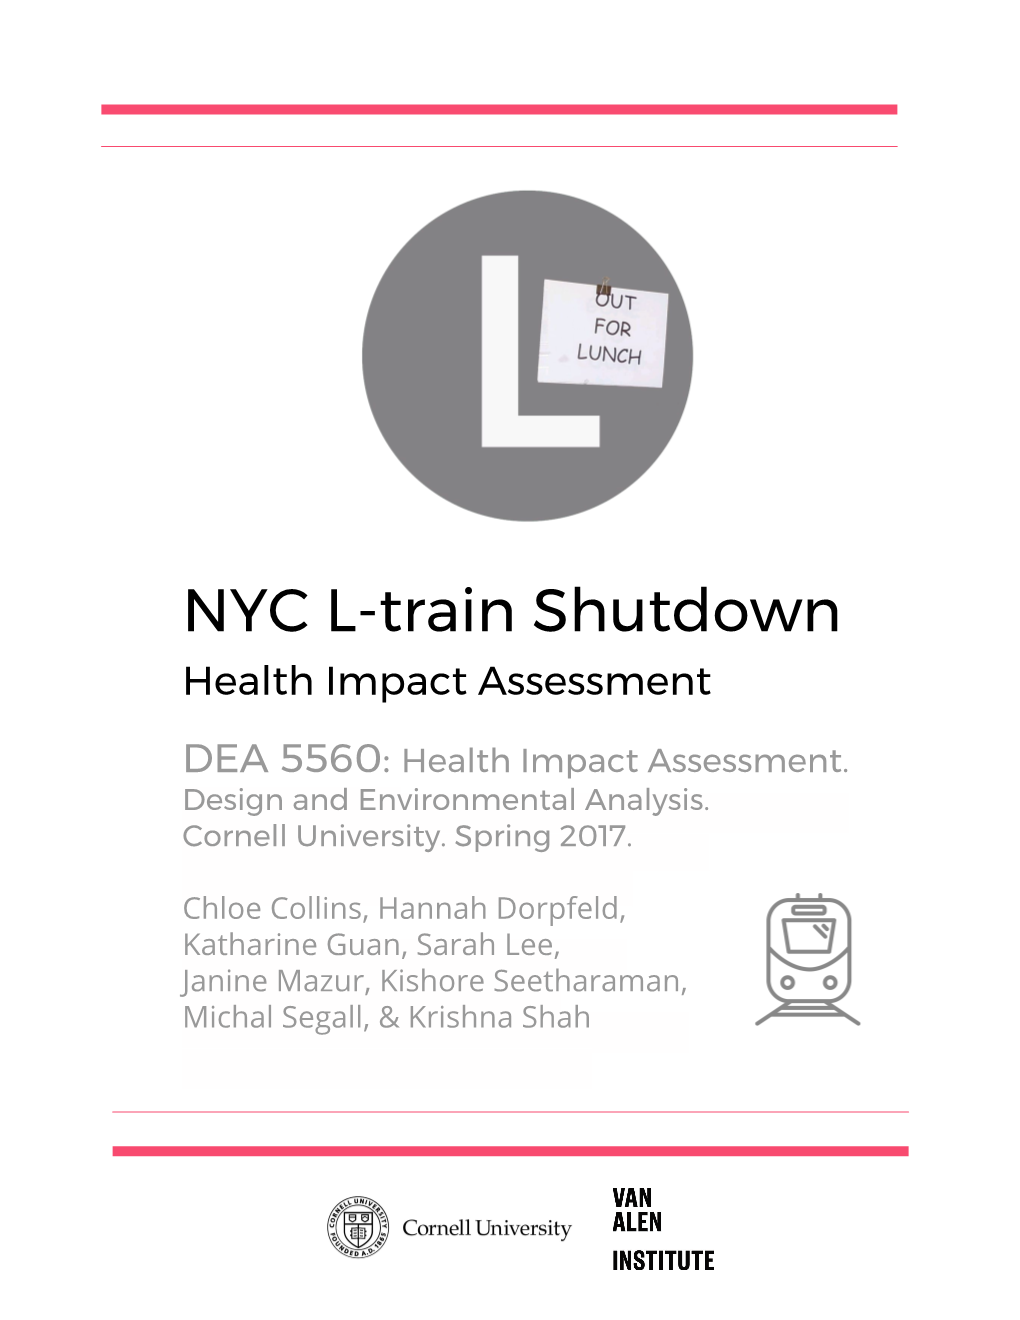 NYC L-Train Shutdown Health Impact Assessment